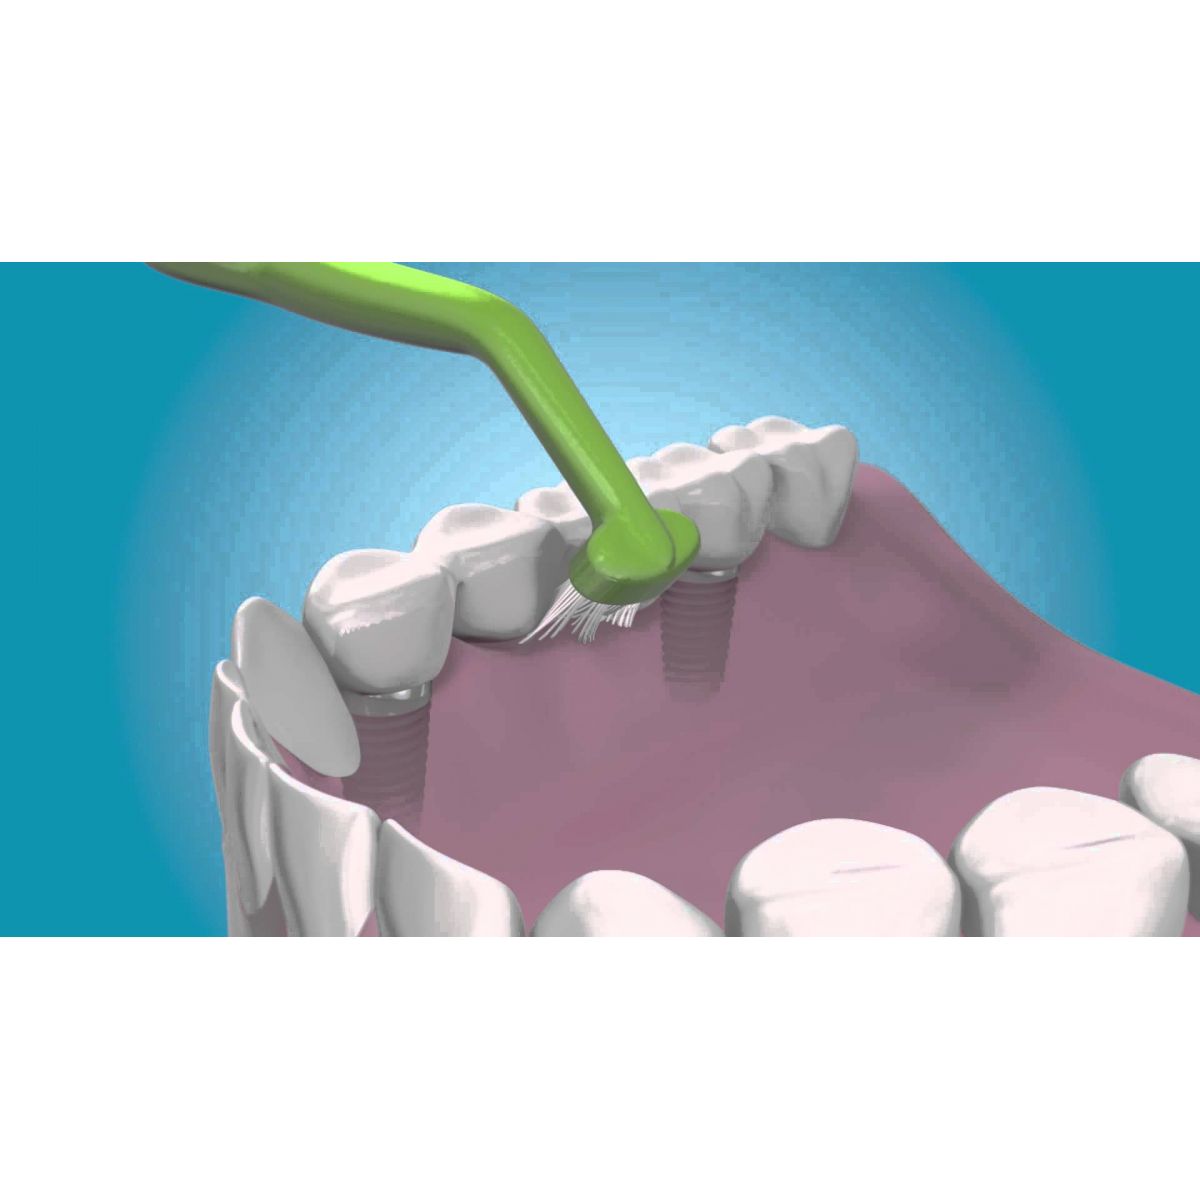 Escova Dental Universal Care Tepe (Implant Care)